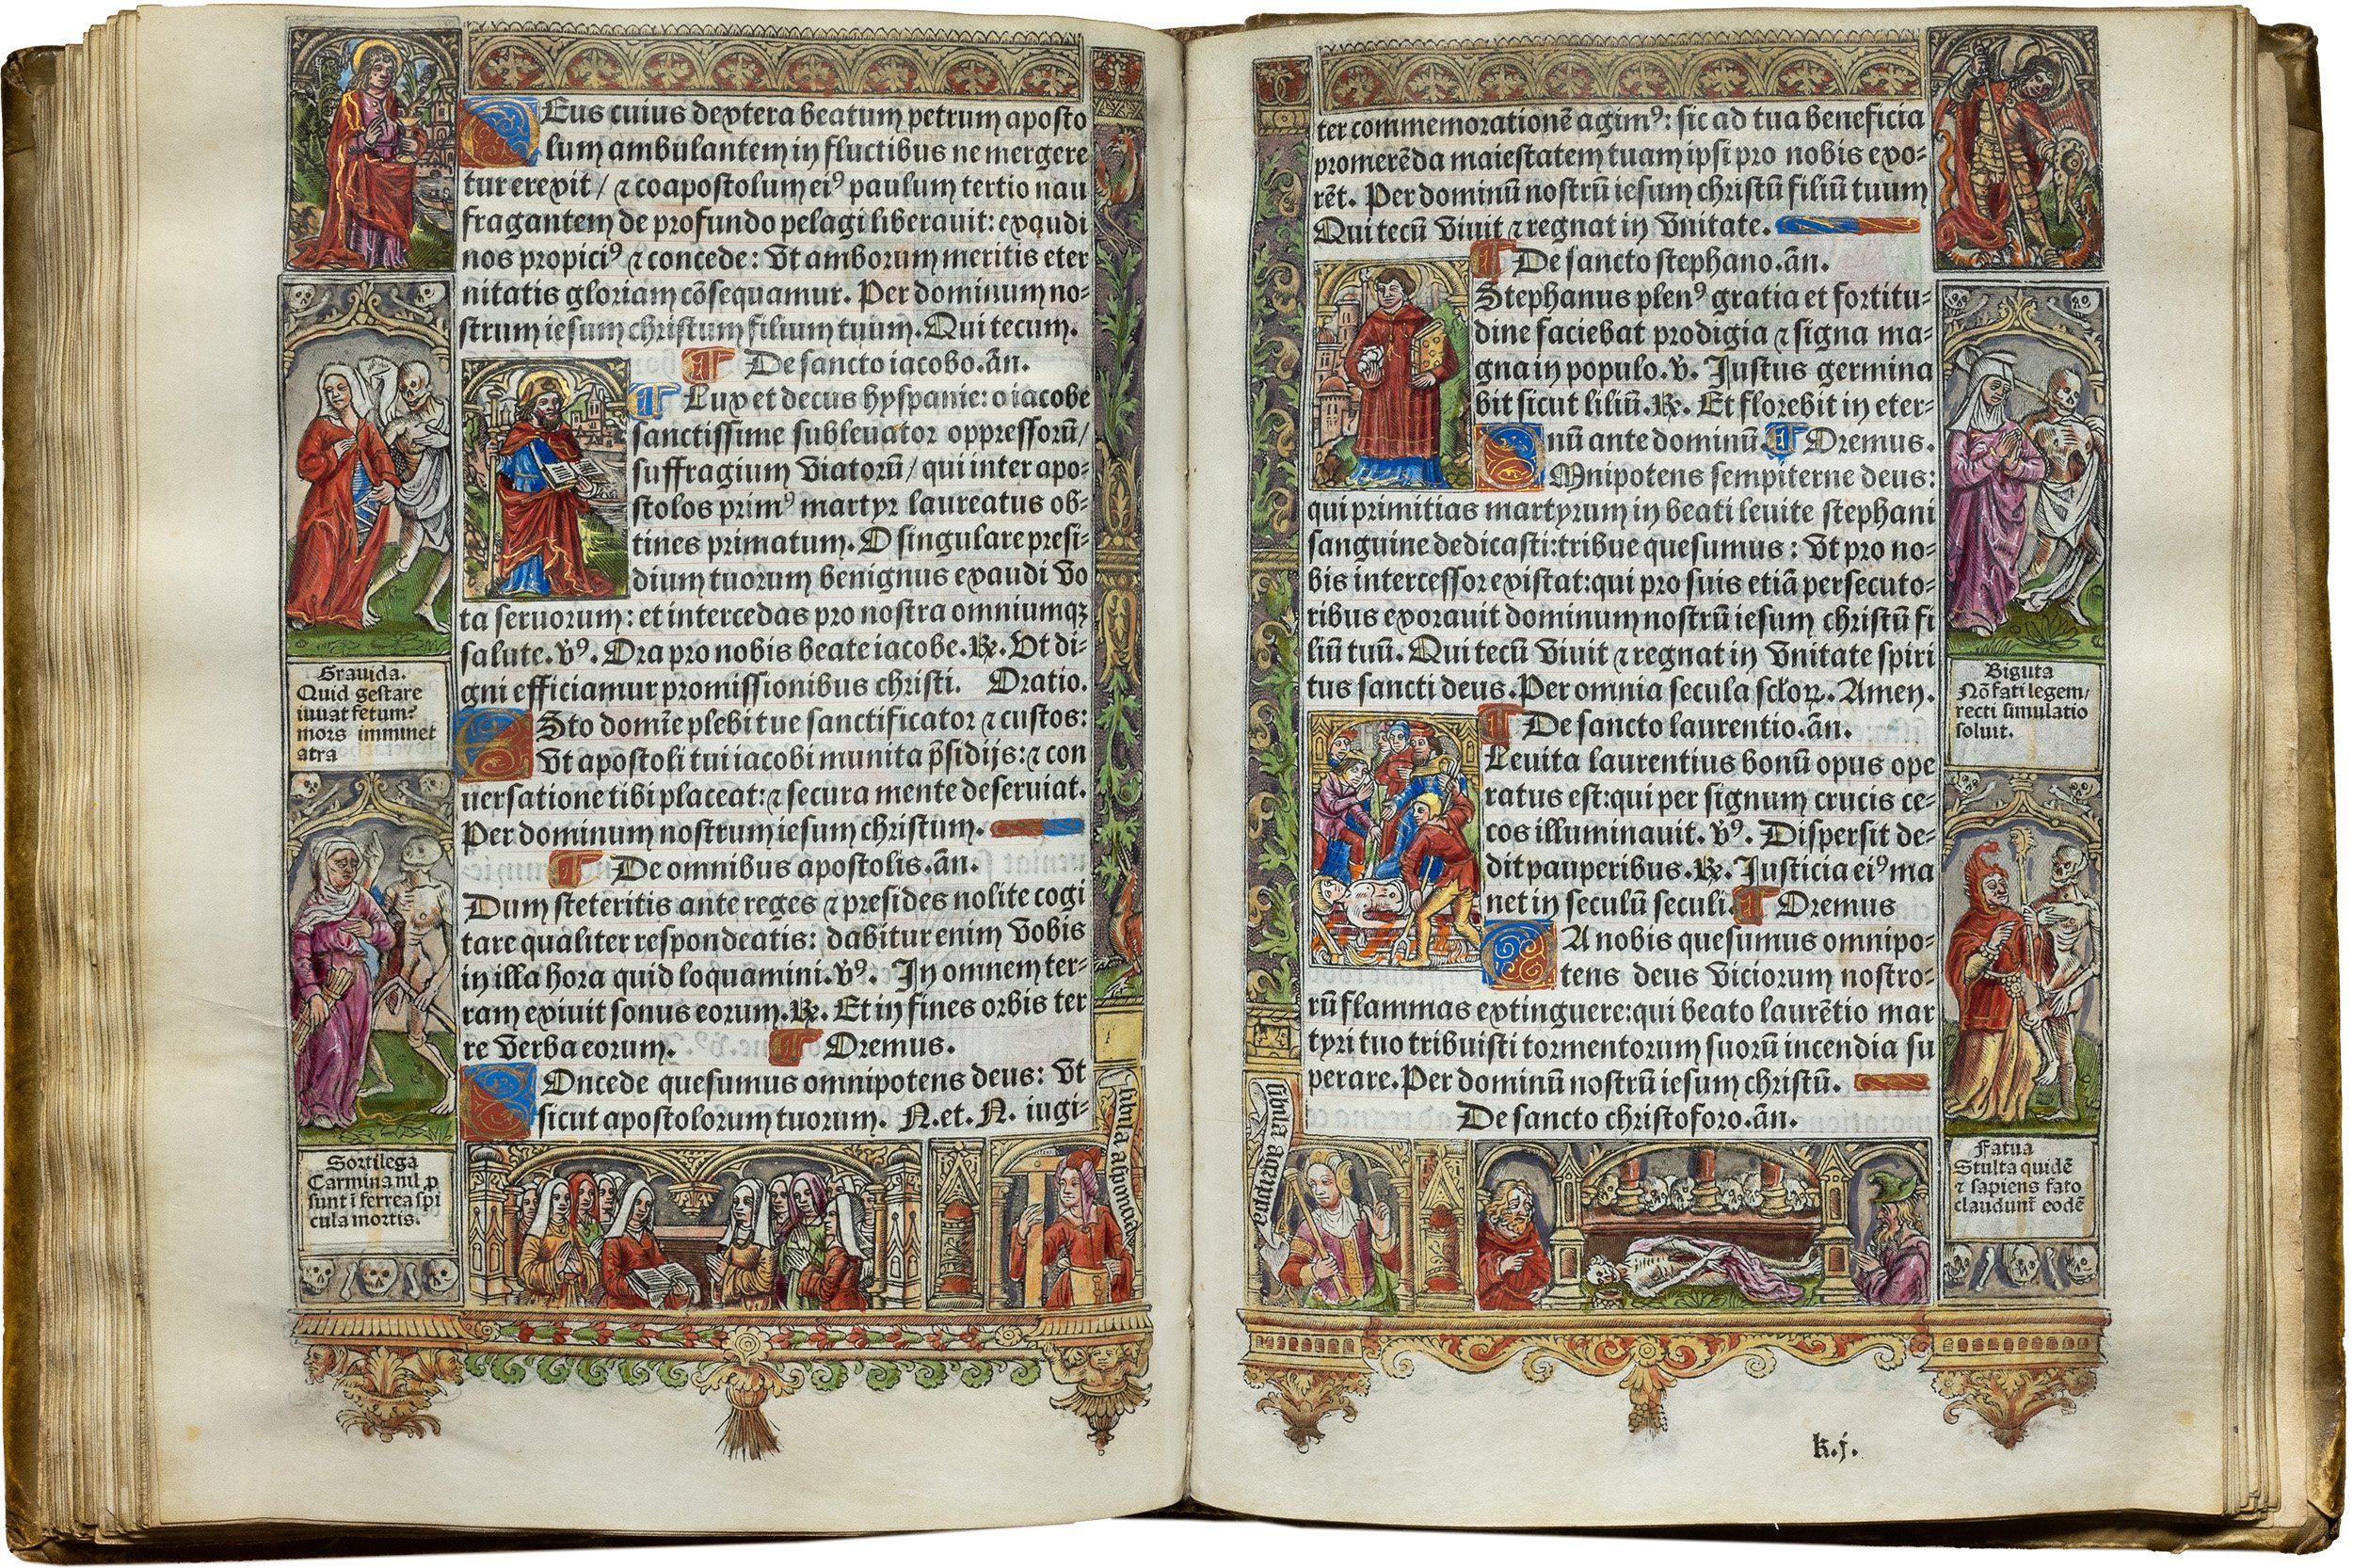 Horae-bmv-31-march-1511-kerver-printed-book-of-hours-illuminated-copy-vellum-77.jpg